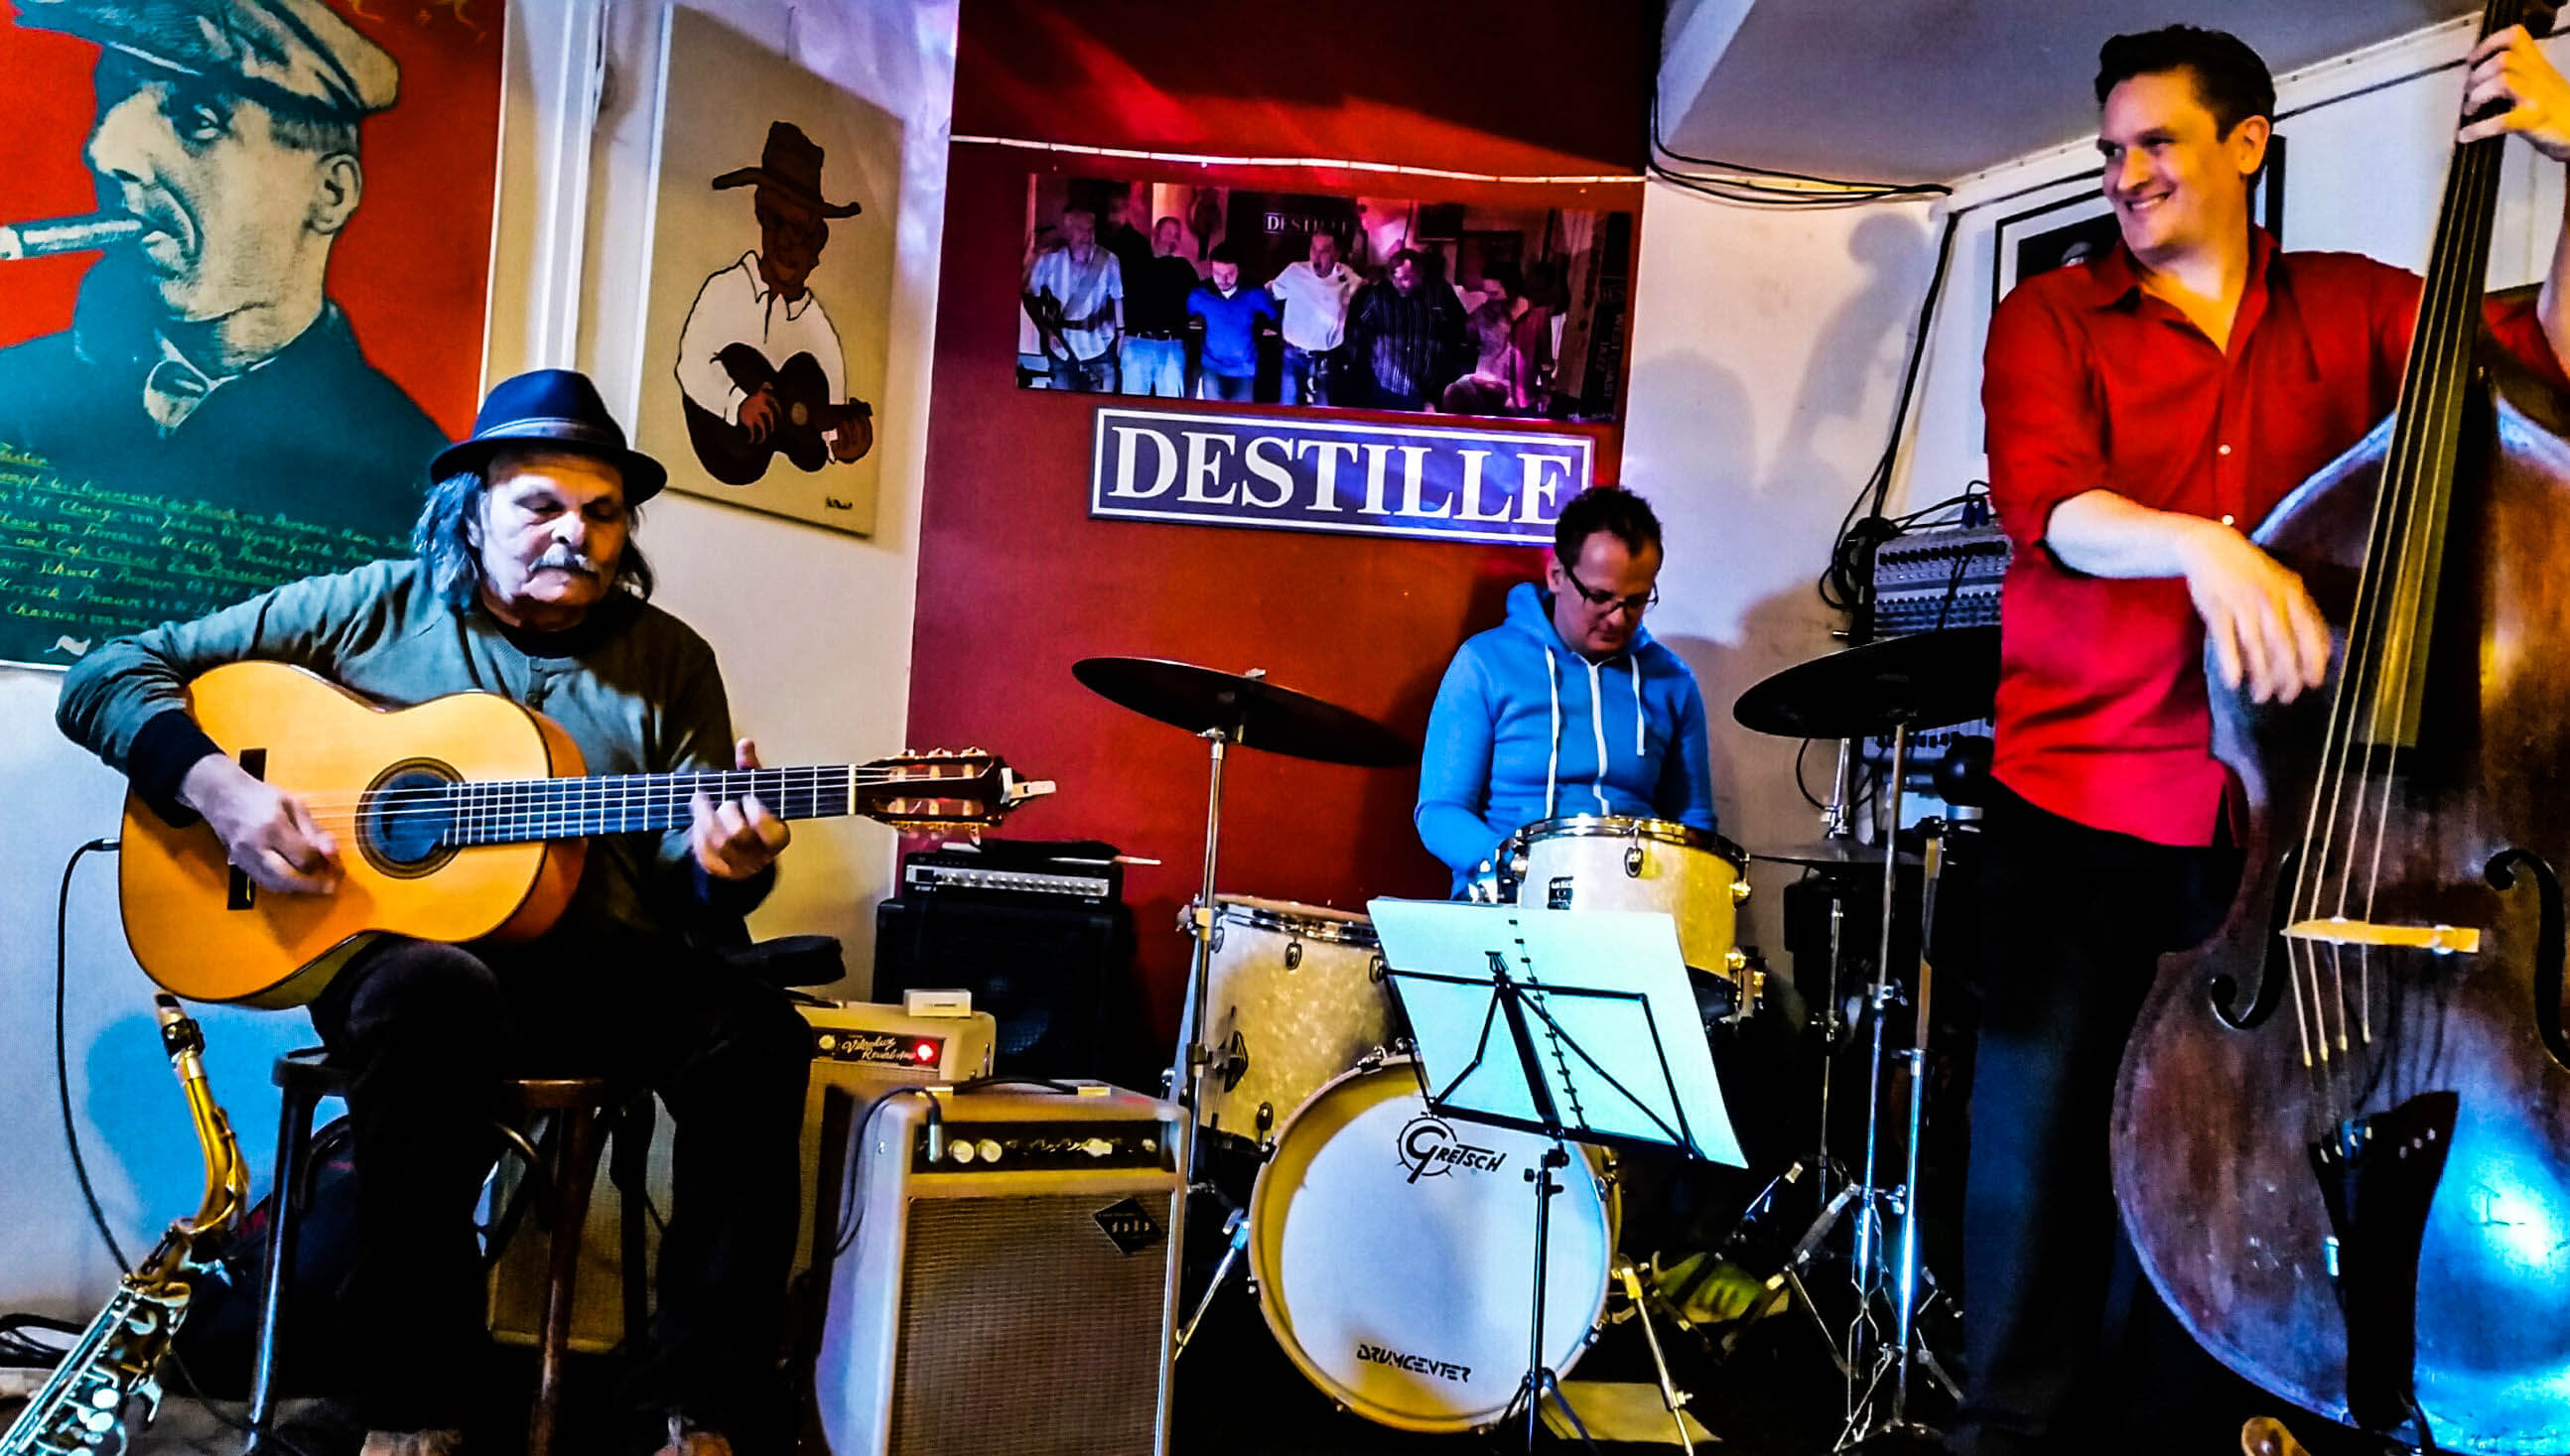 Dusseldorf, Germany, live music by the Meerstein Express at Destille Pub.